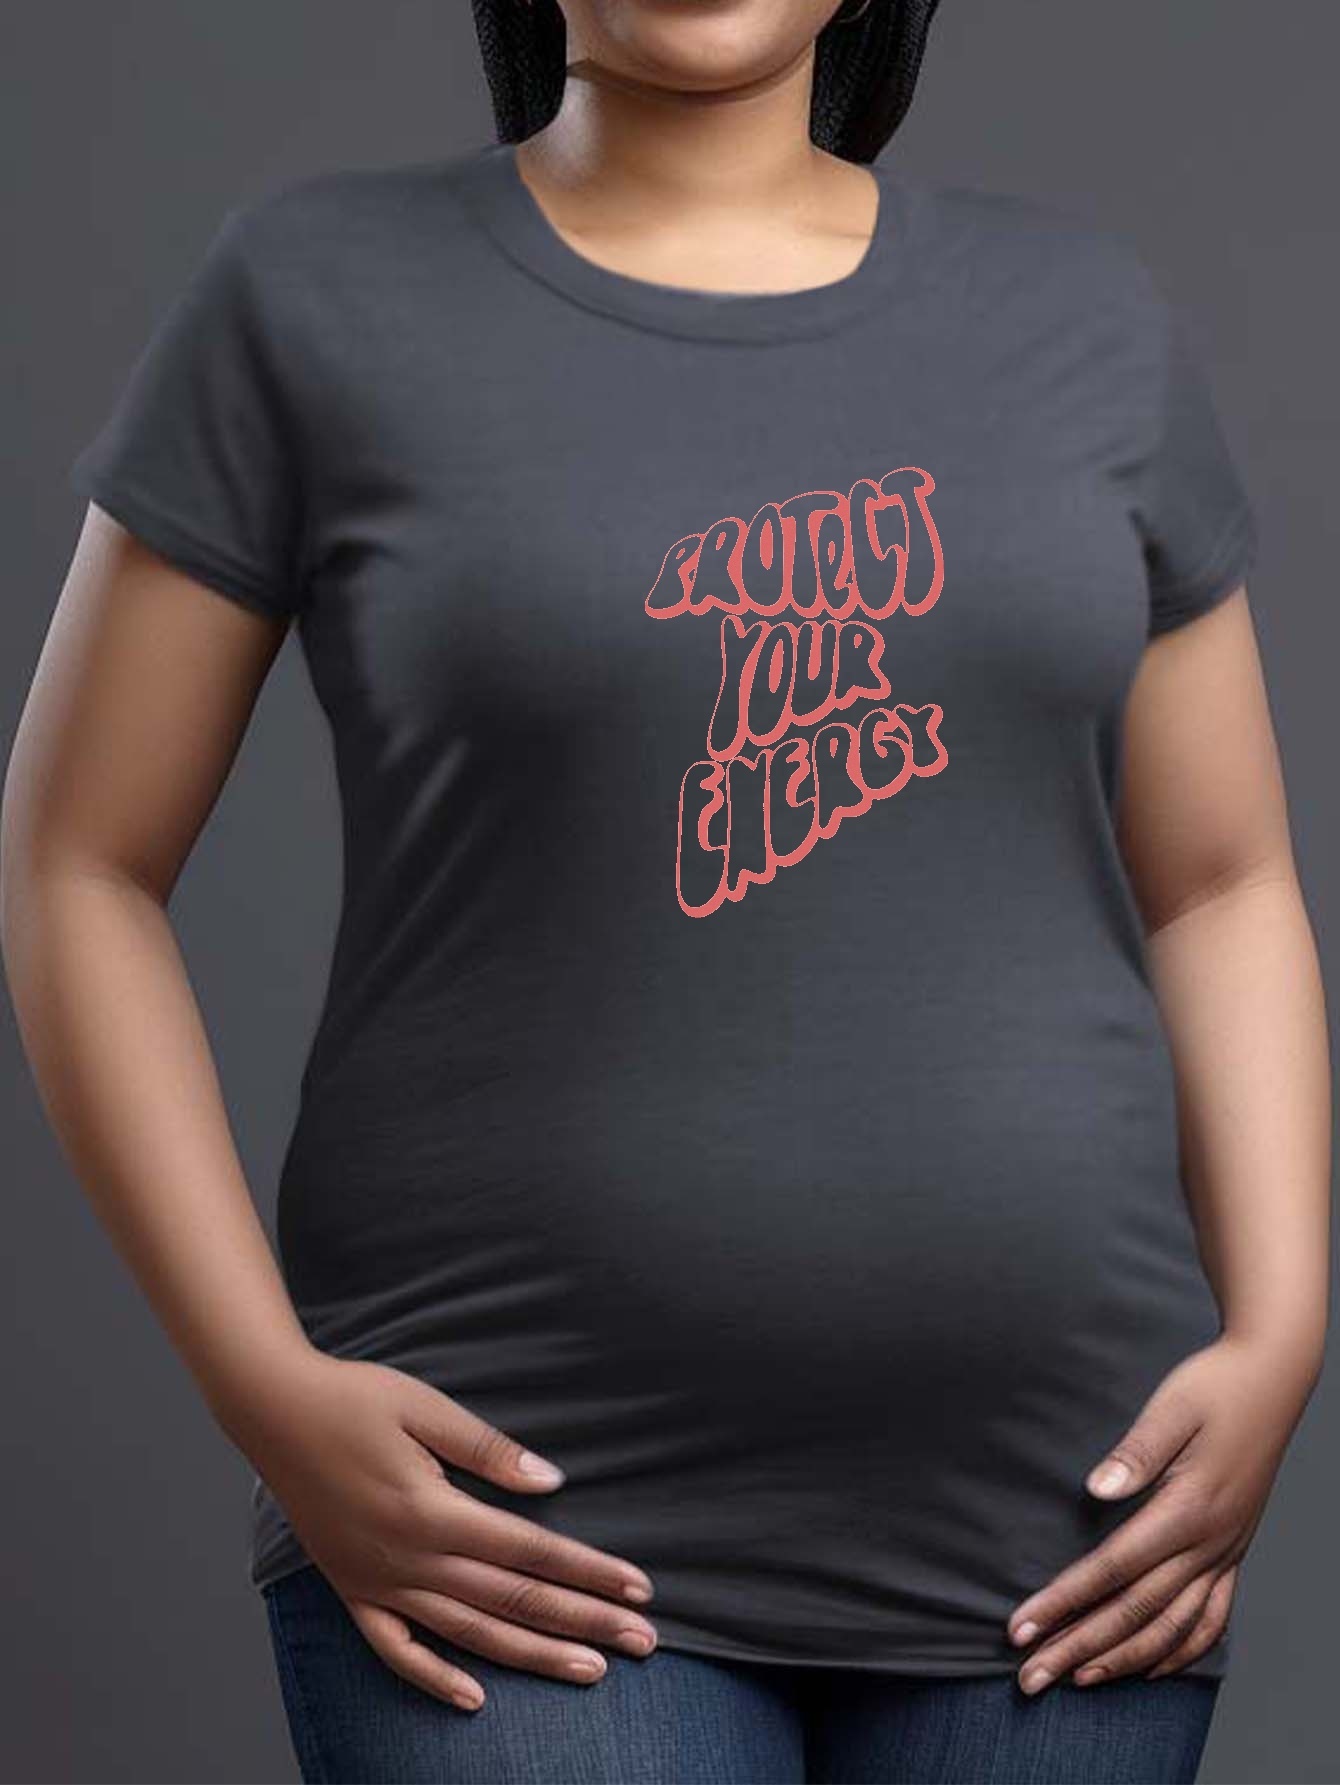 Funny Maternity Shirts' Women's T-Shirt